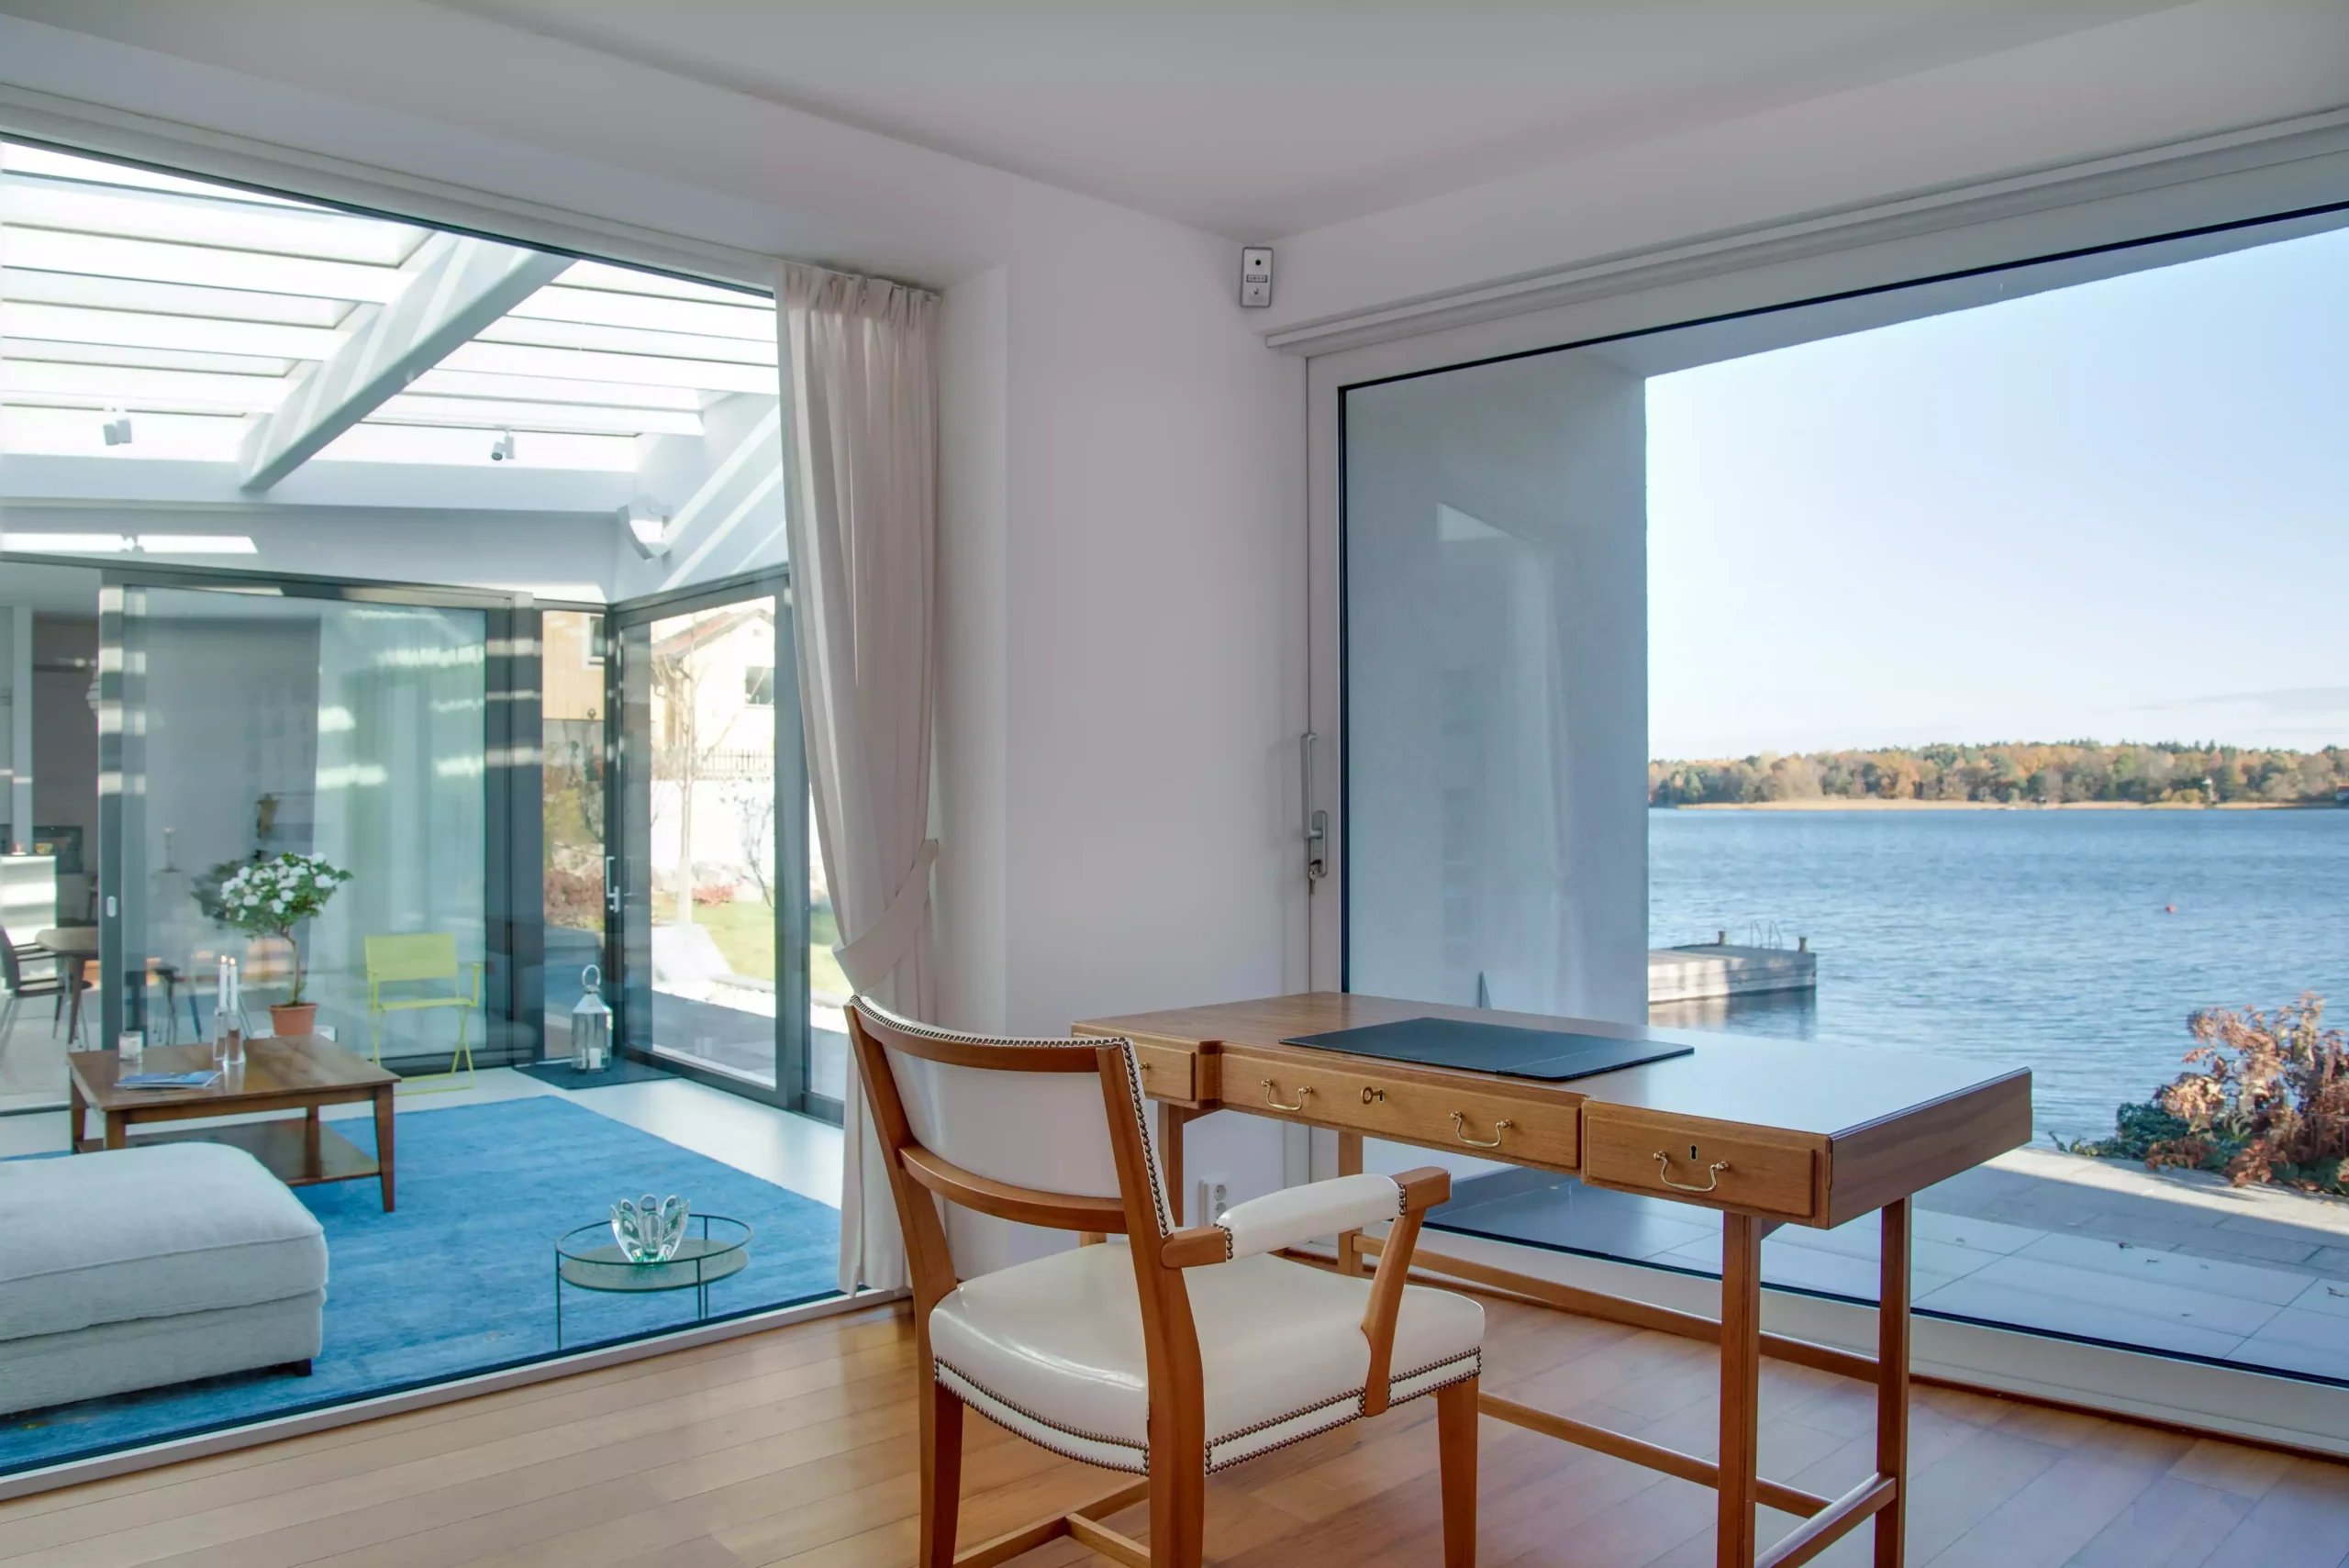 luxury-beach-house-with-glass-windows-beautiful-scenery-sea